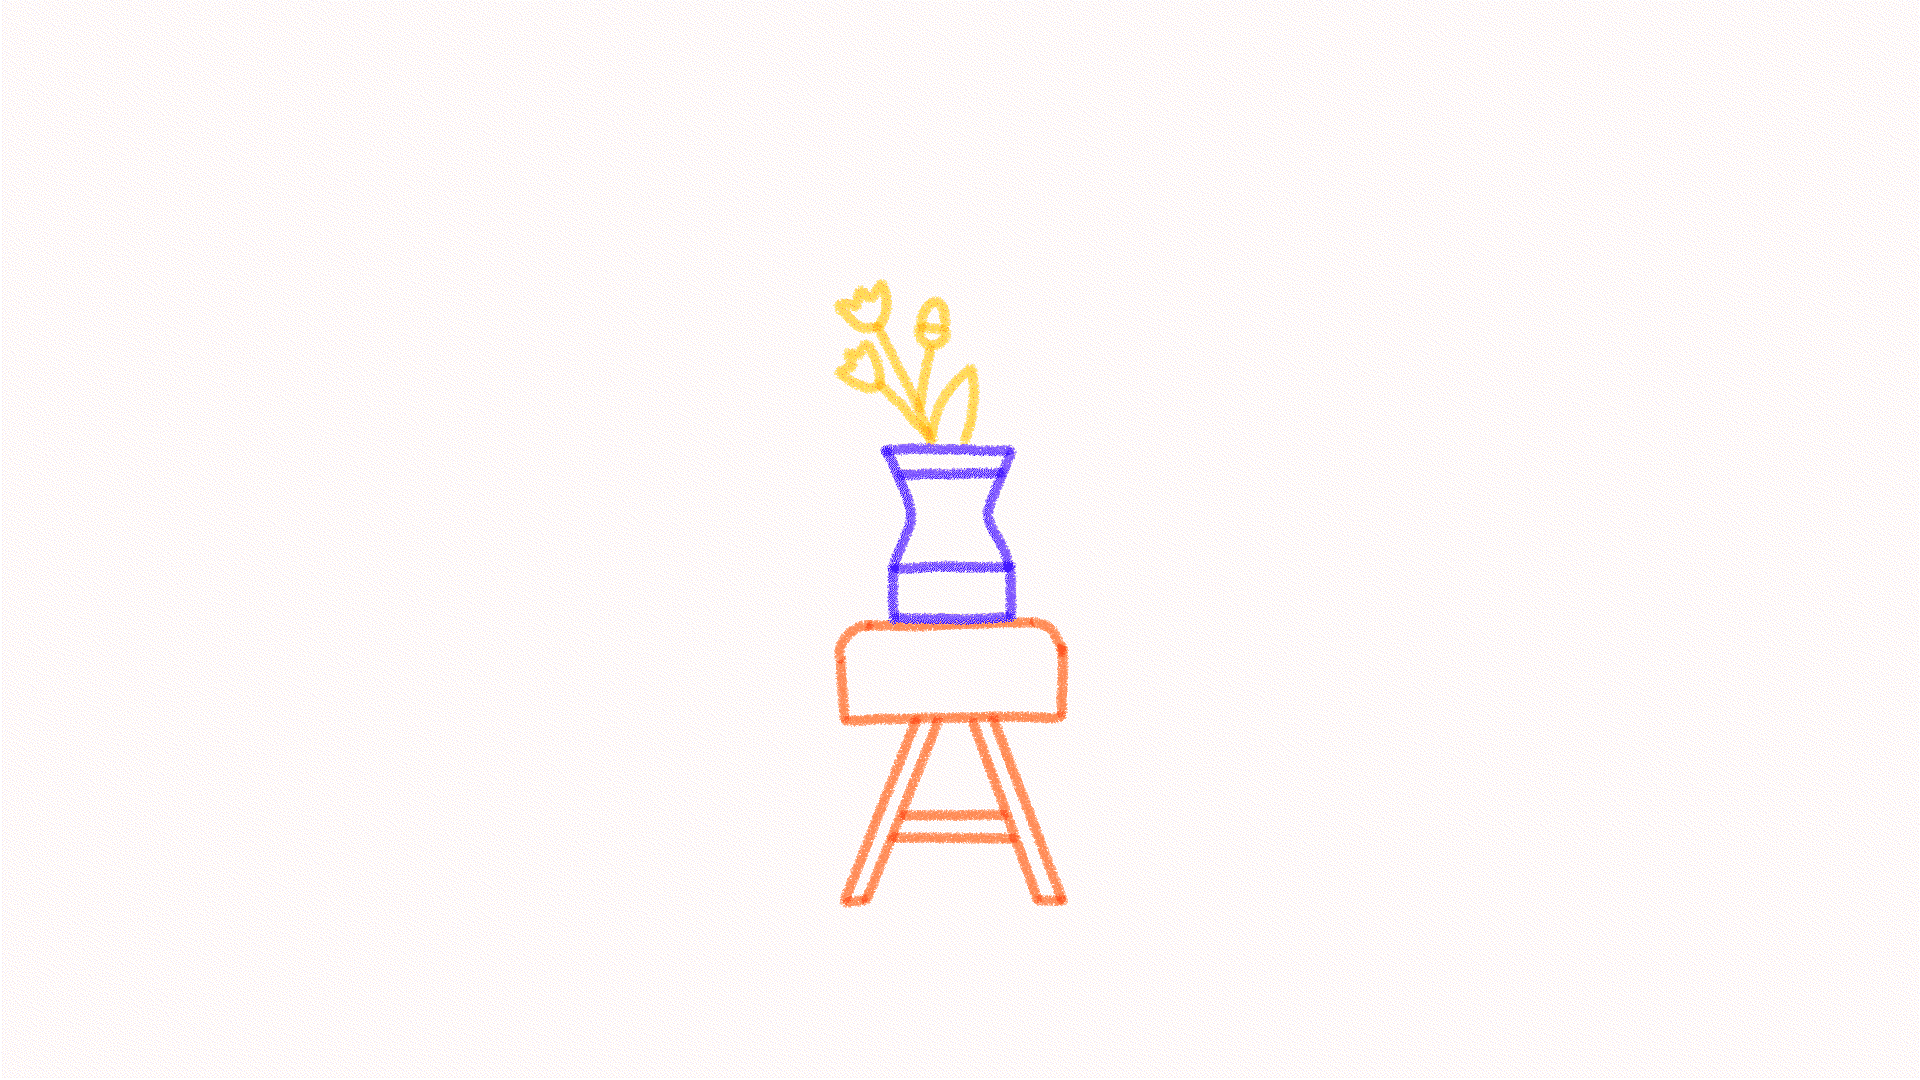 Chair Vase 2d 2d animation animation frame by frame gif graphic design illustration